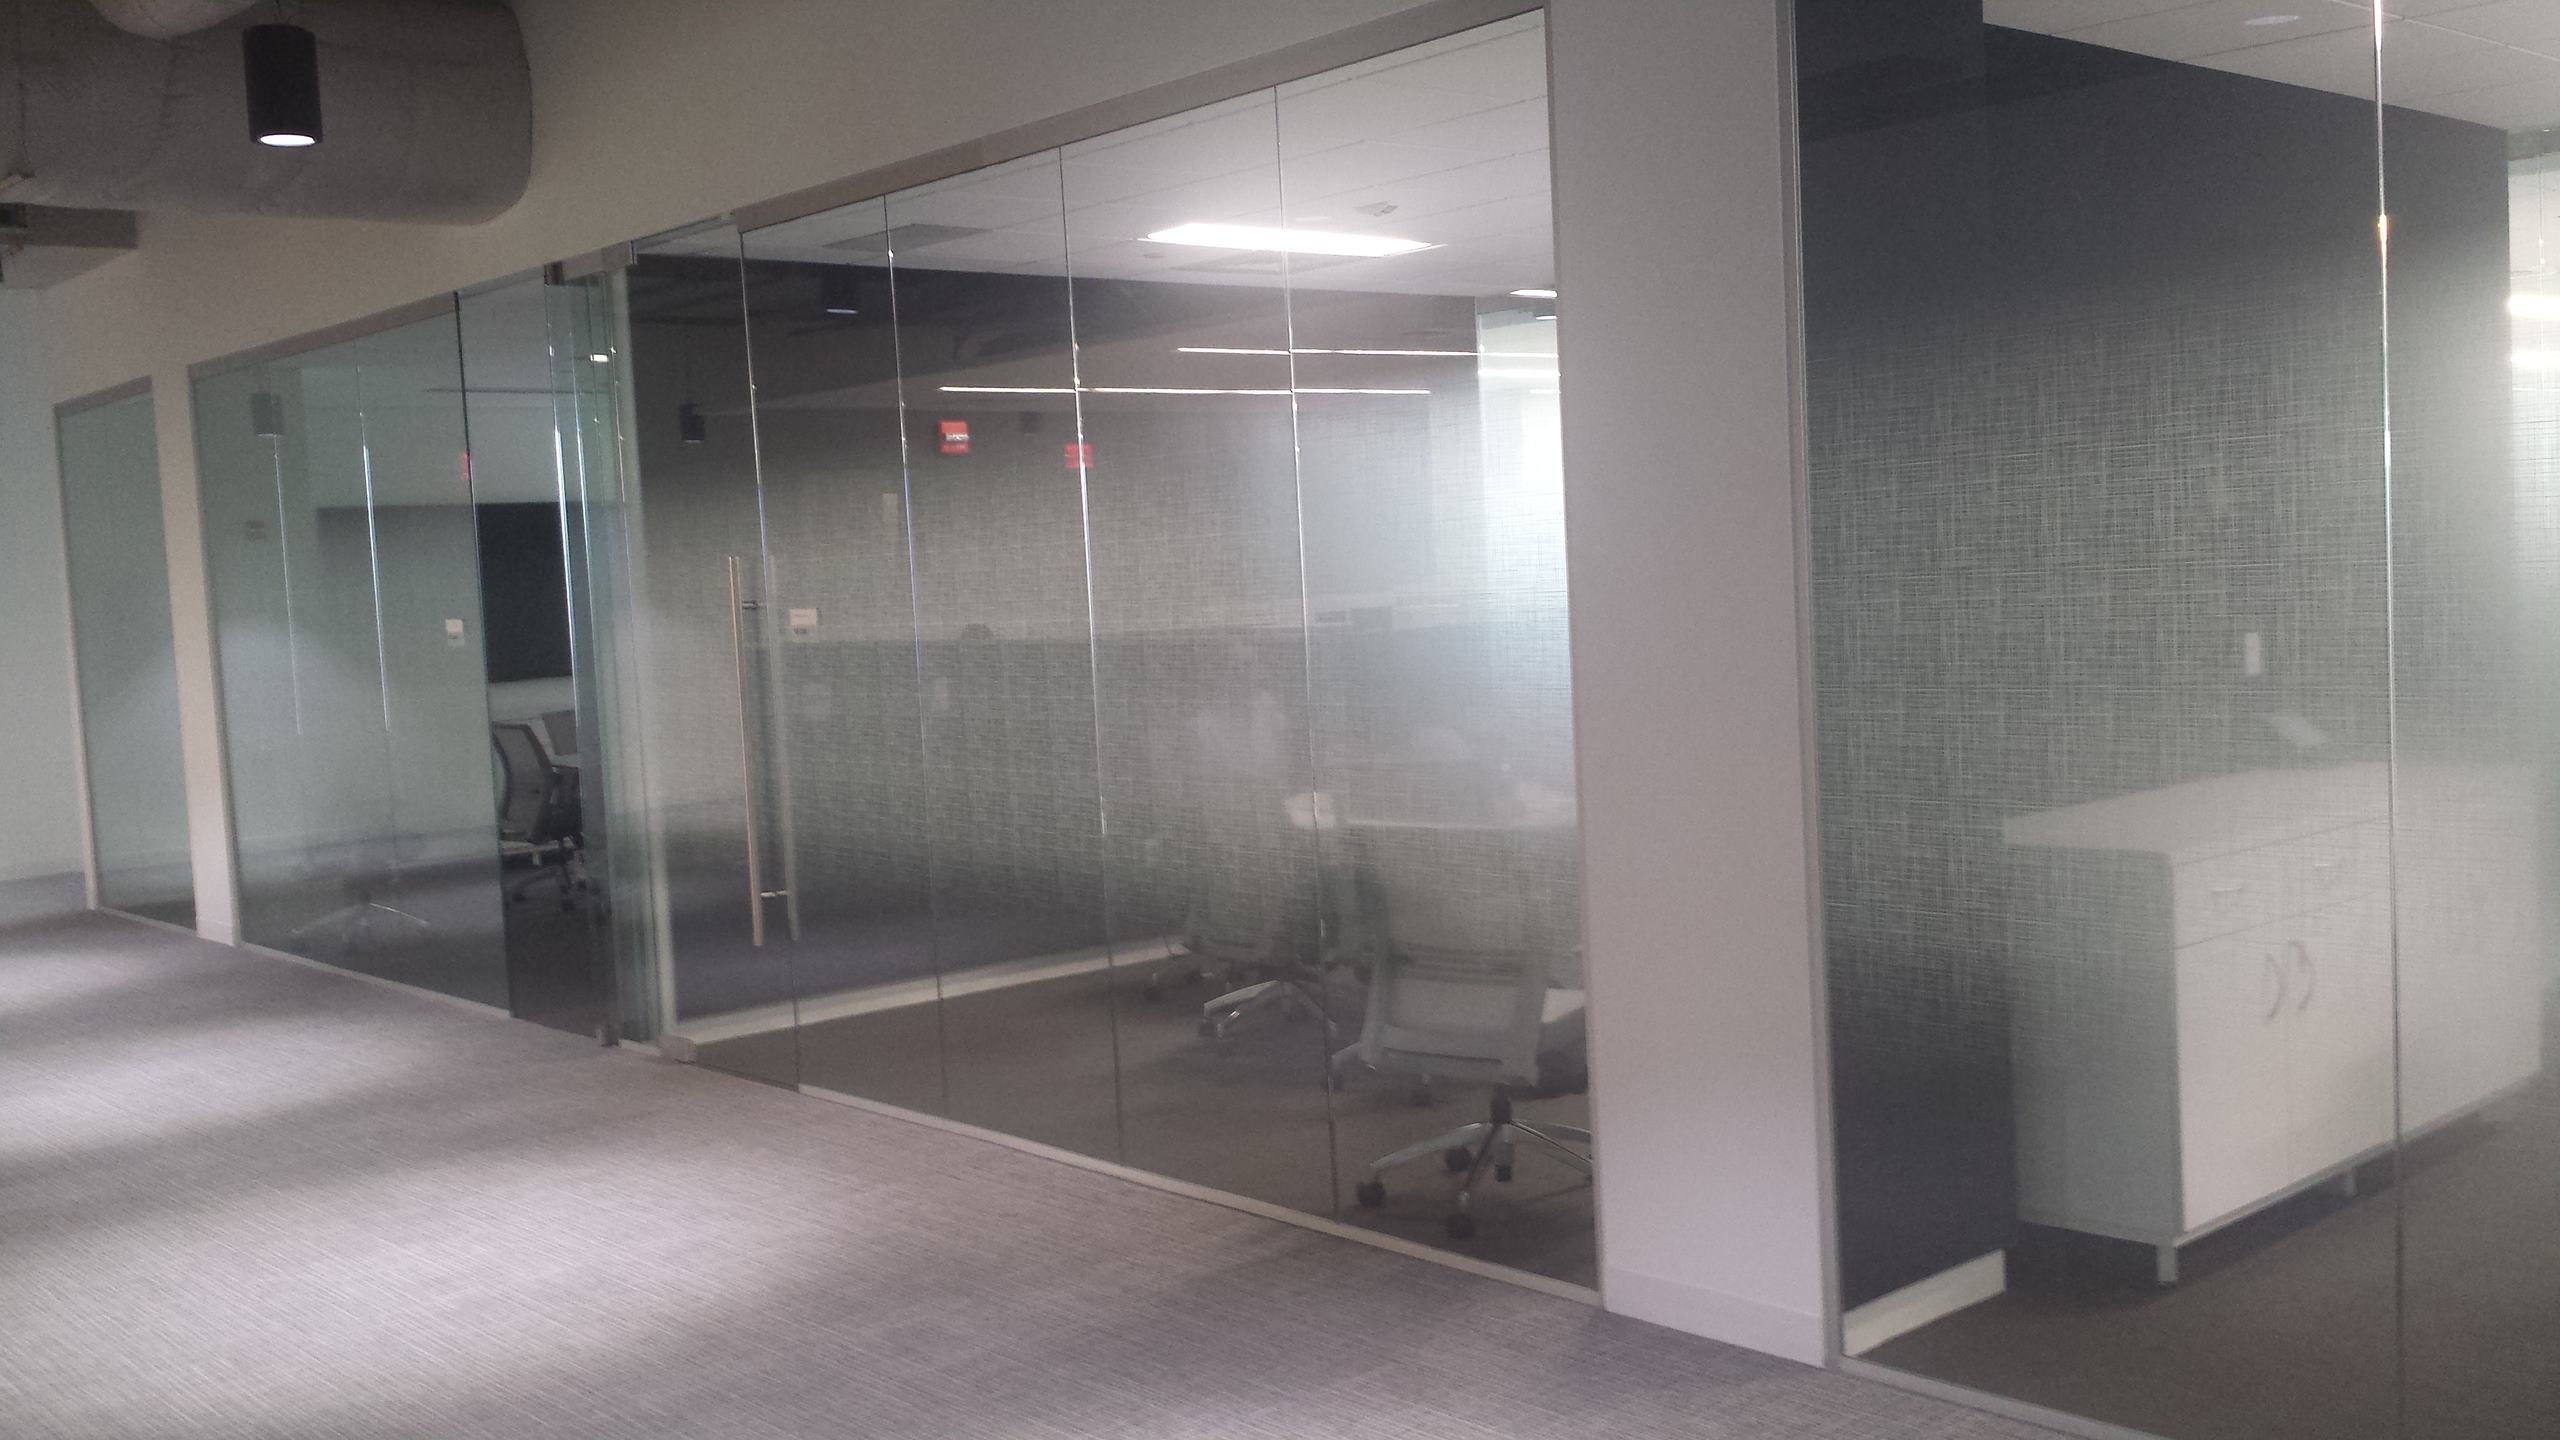 Basic window film design for office area